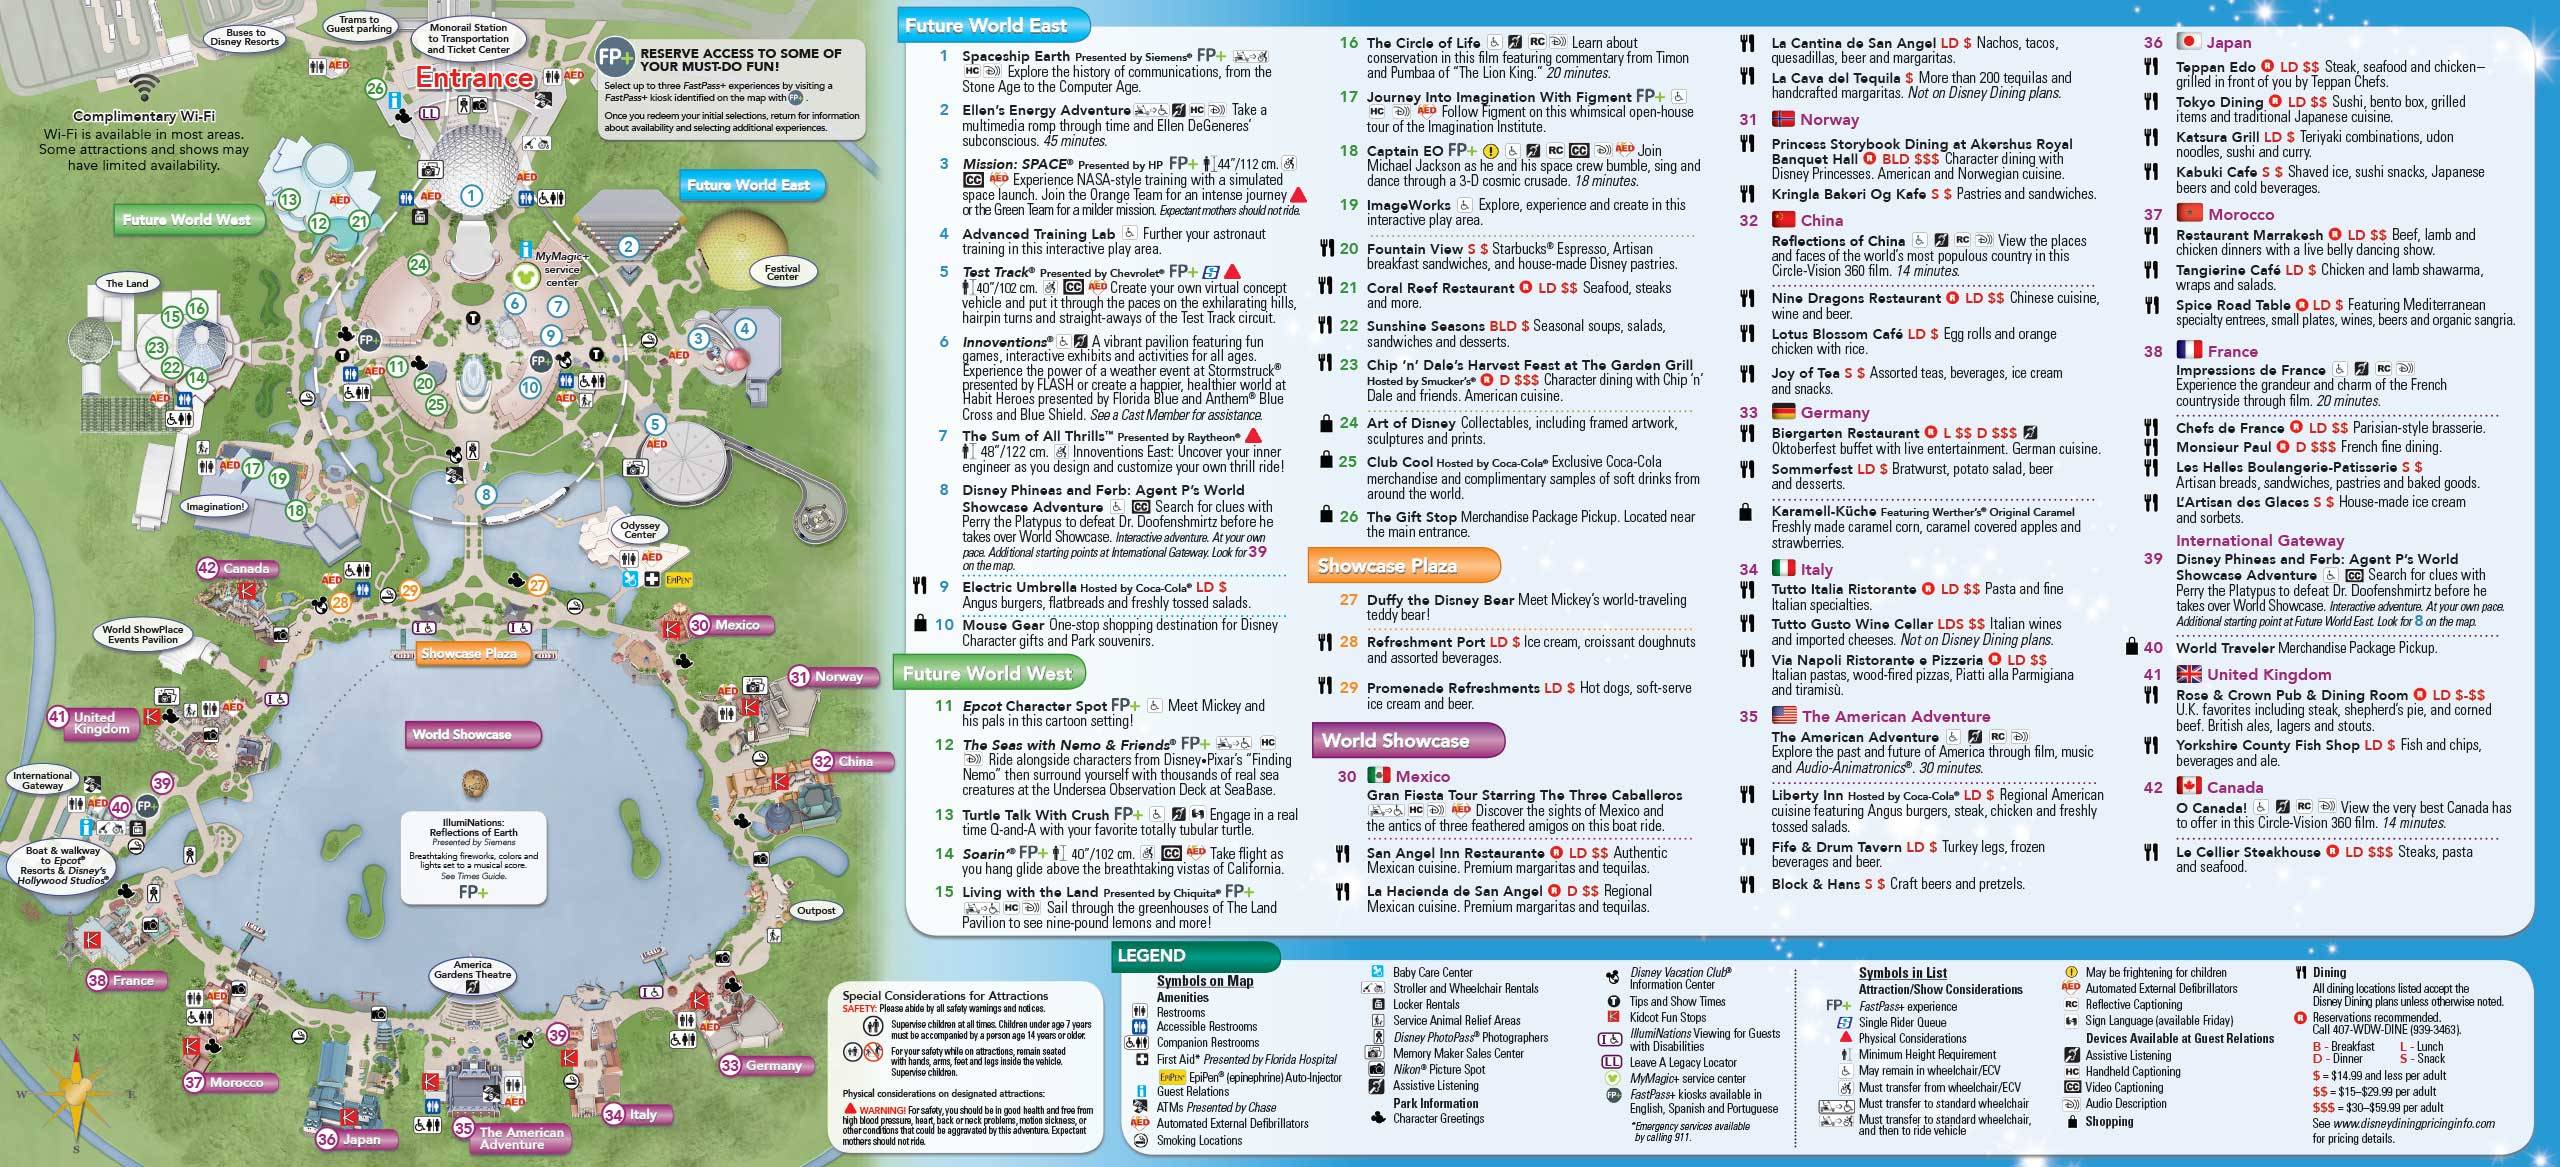 May 2015 Walt Disney World Resort Park Maps - Photo 5 of 14